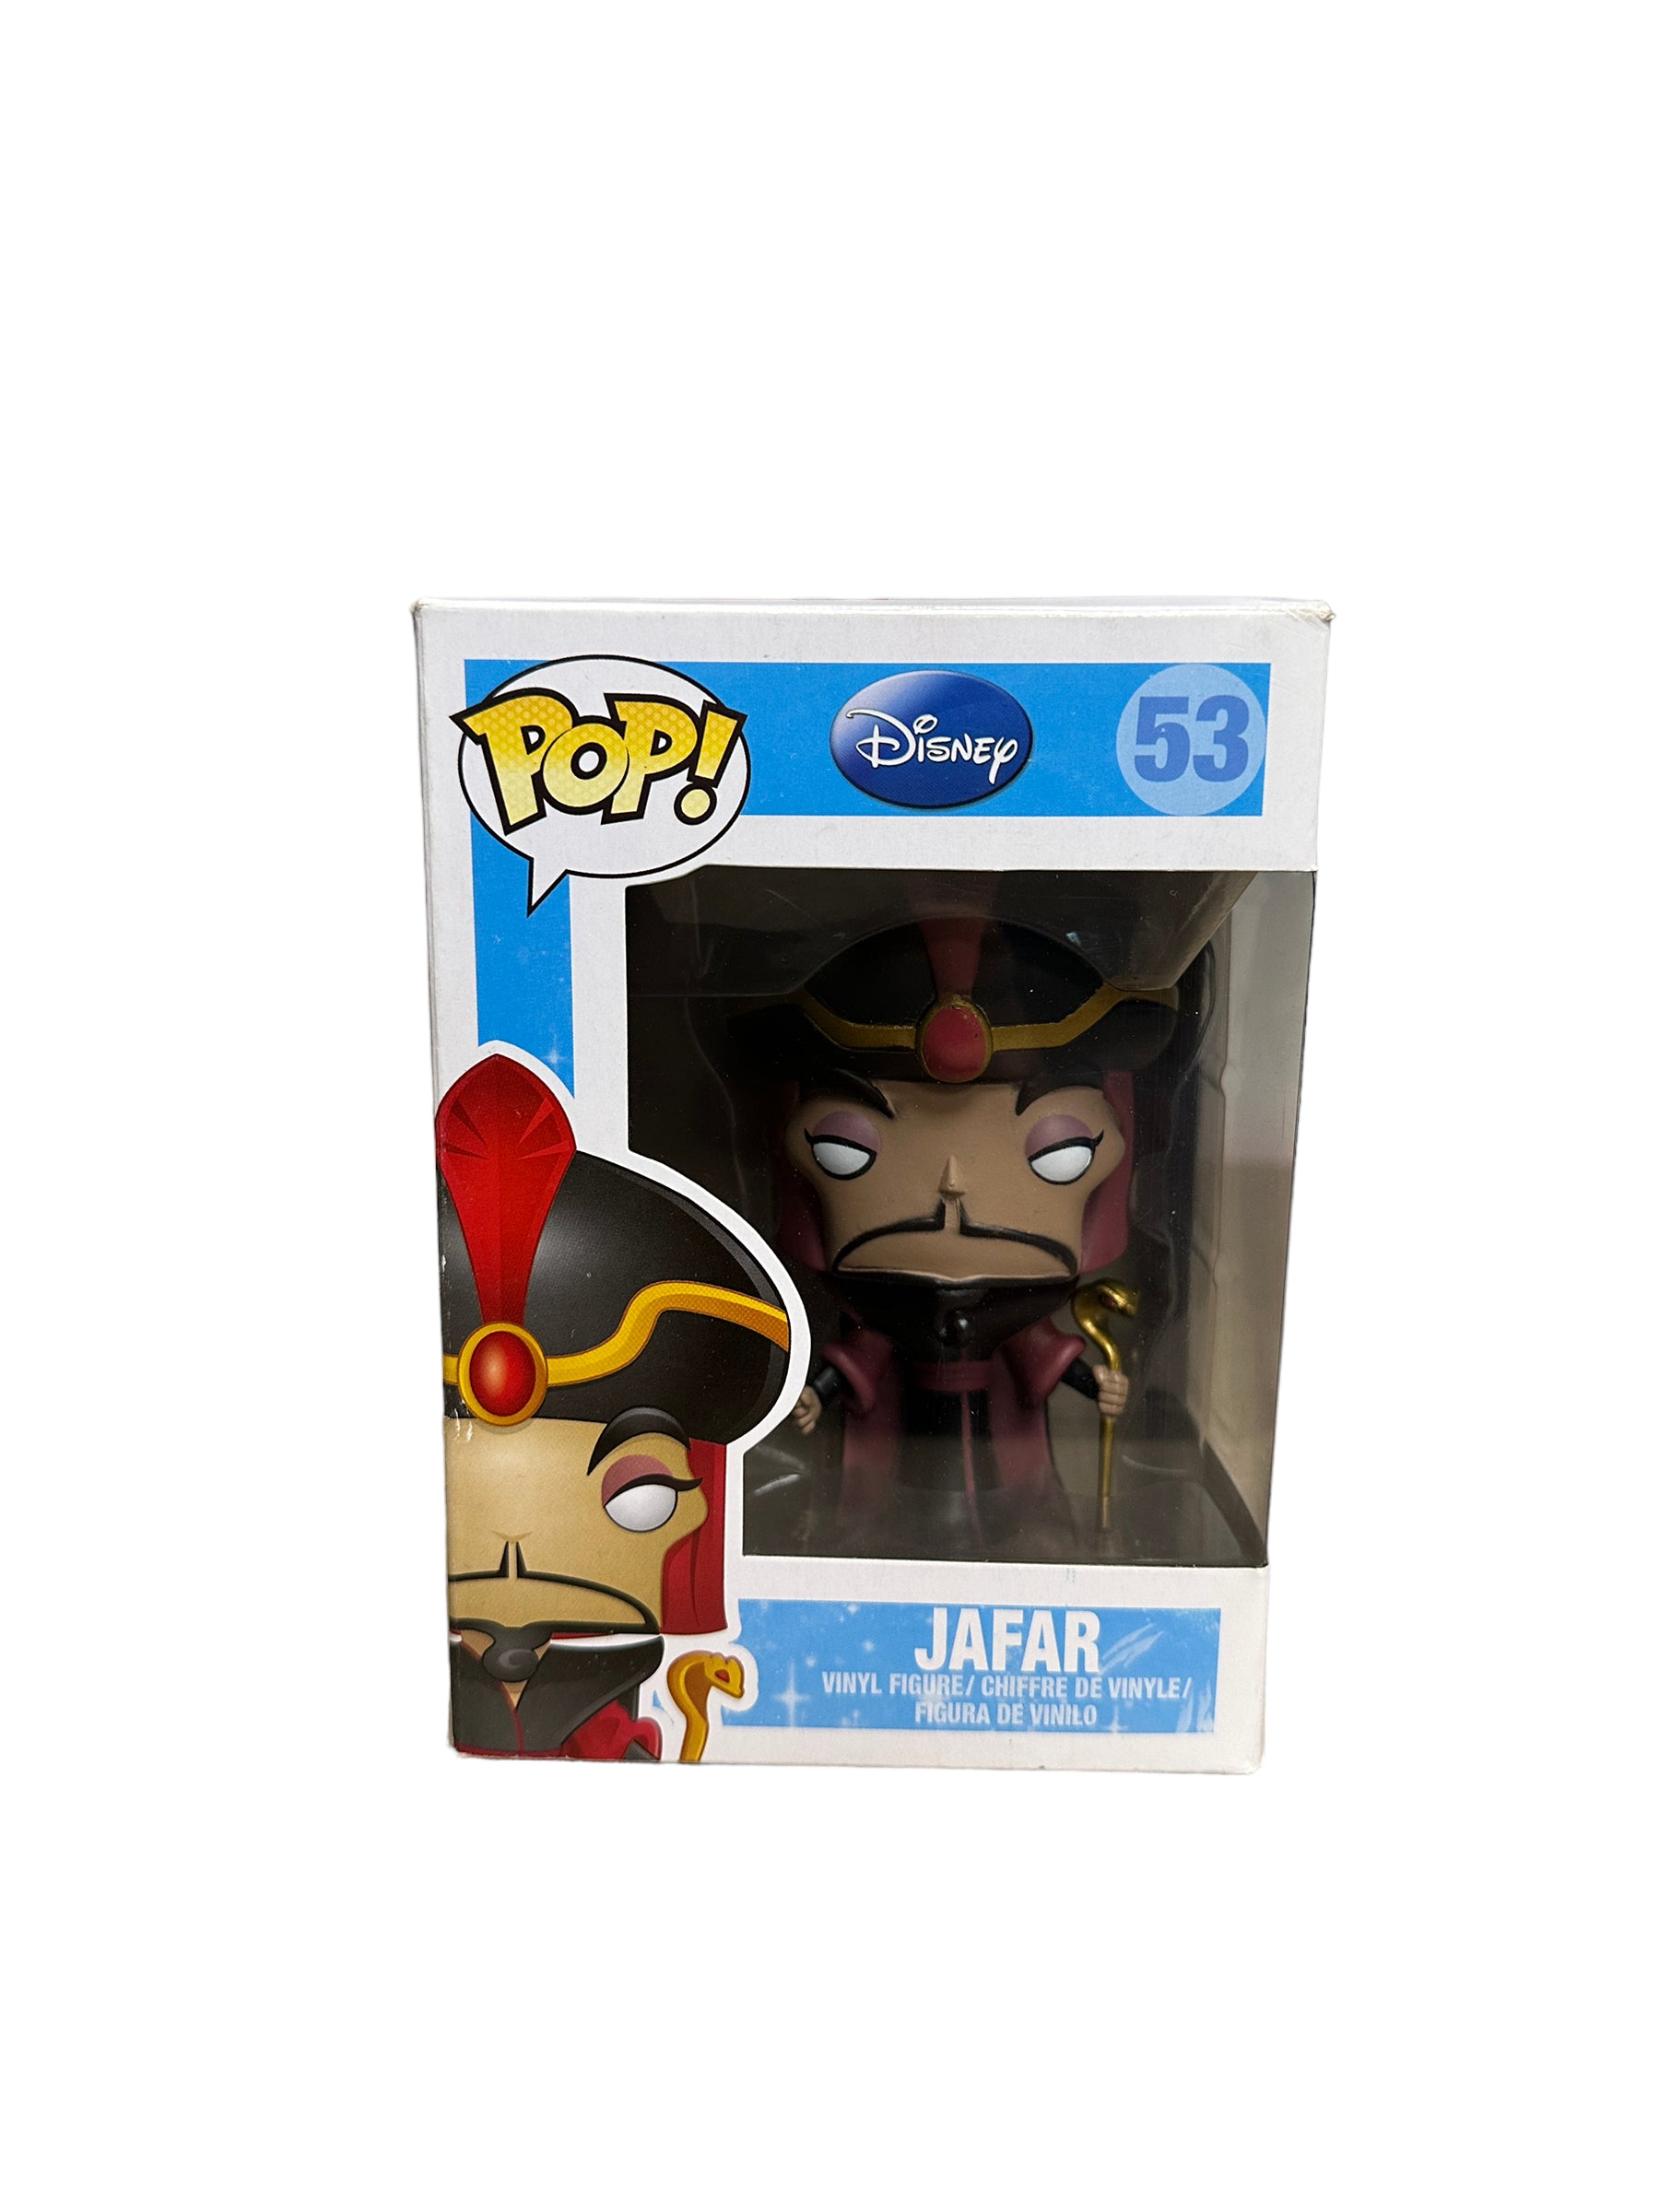 Jafar #53 Funko Pop! - Disney Series 5 - 2013 Pop! - Condition 6.5/10